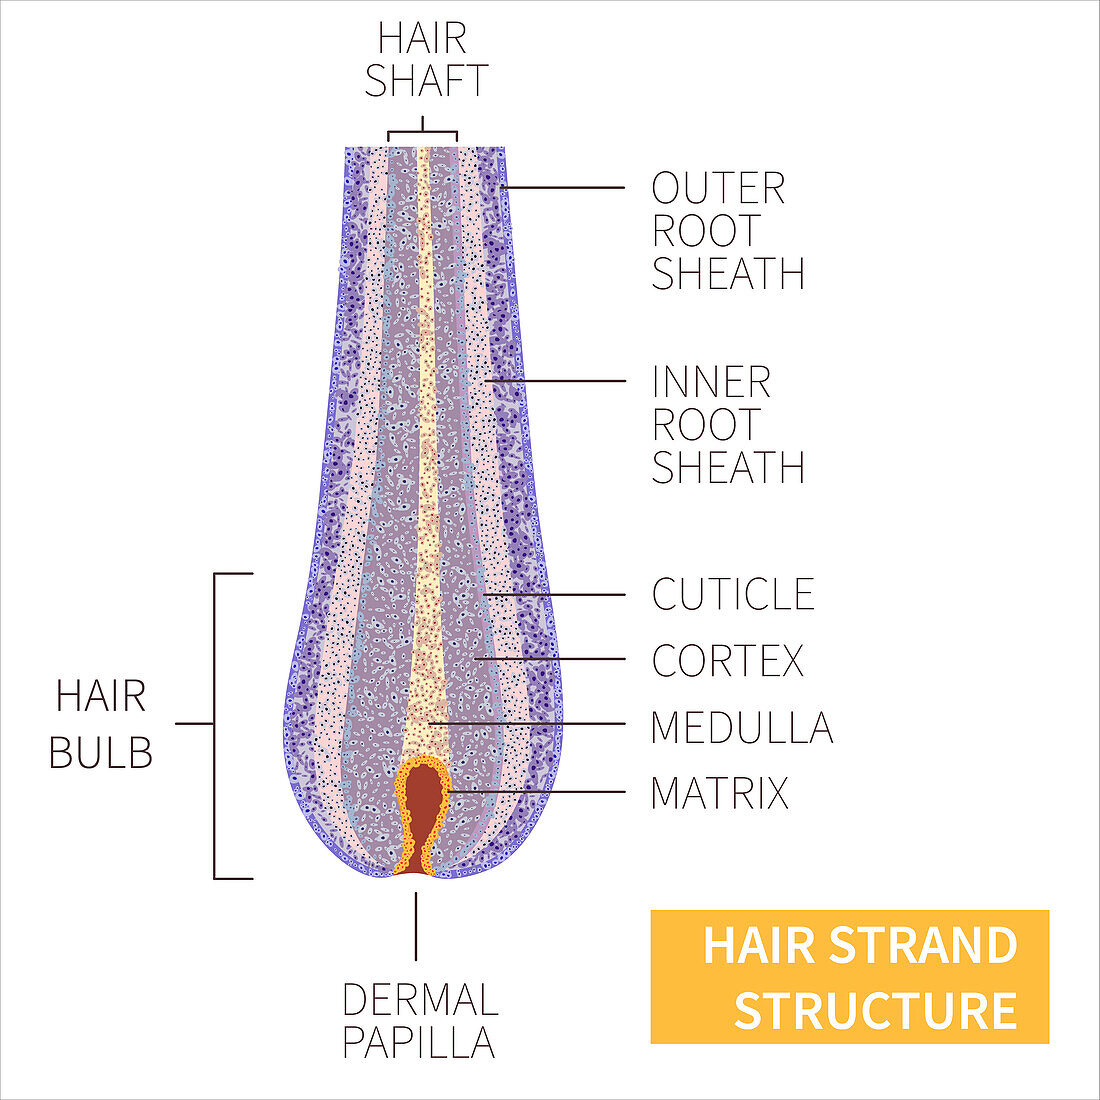 Hair strand structure, illustration